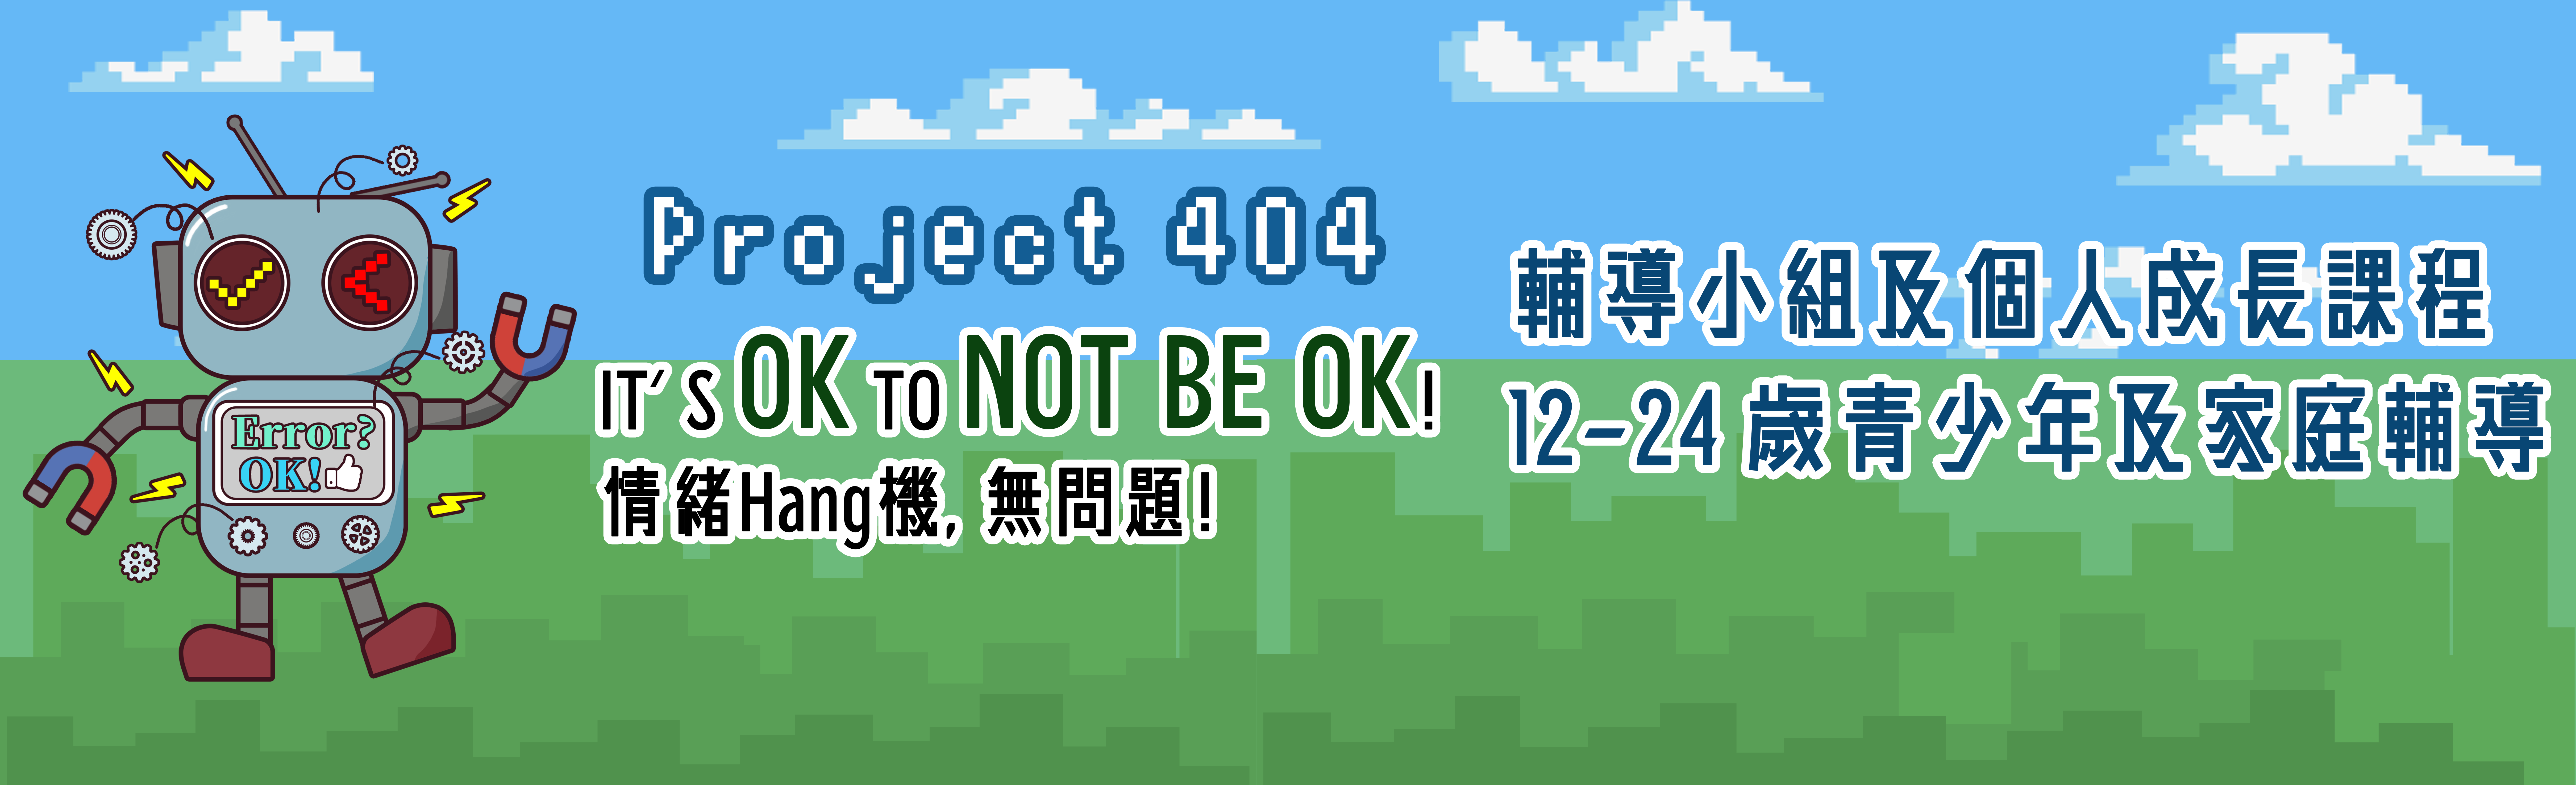 Project 404 青少年情緒支援計劃